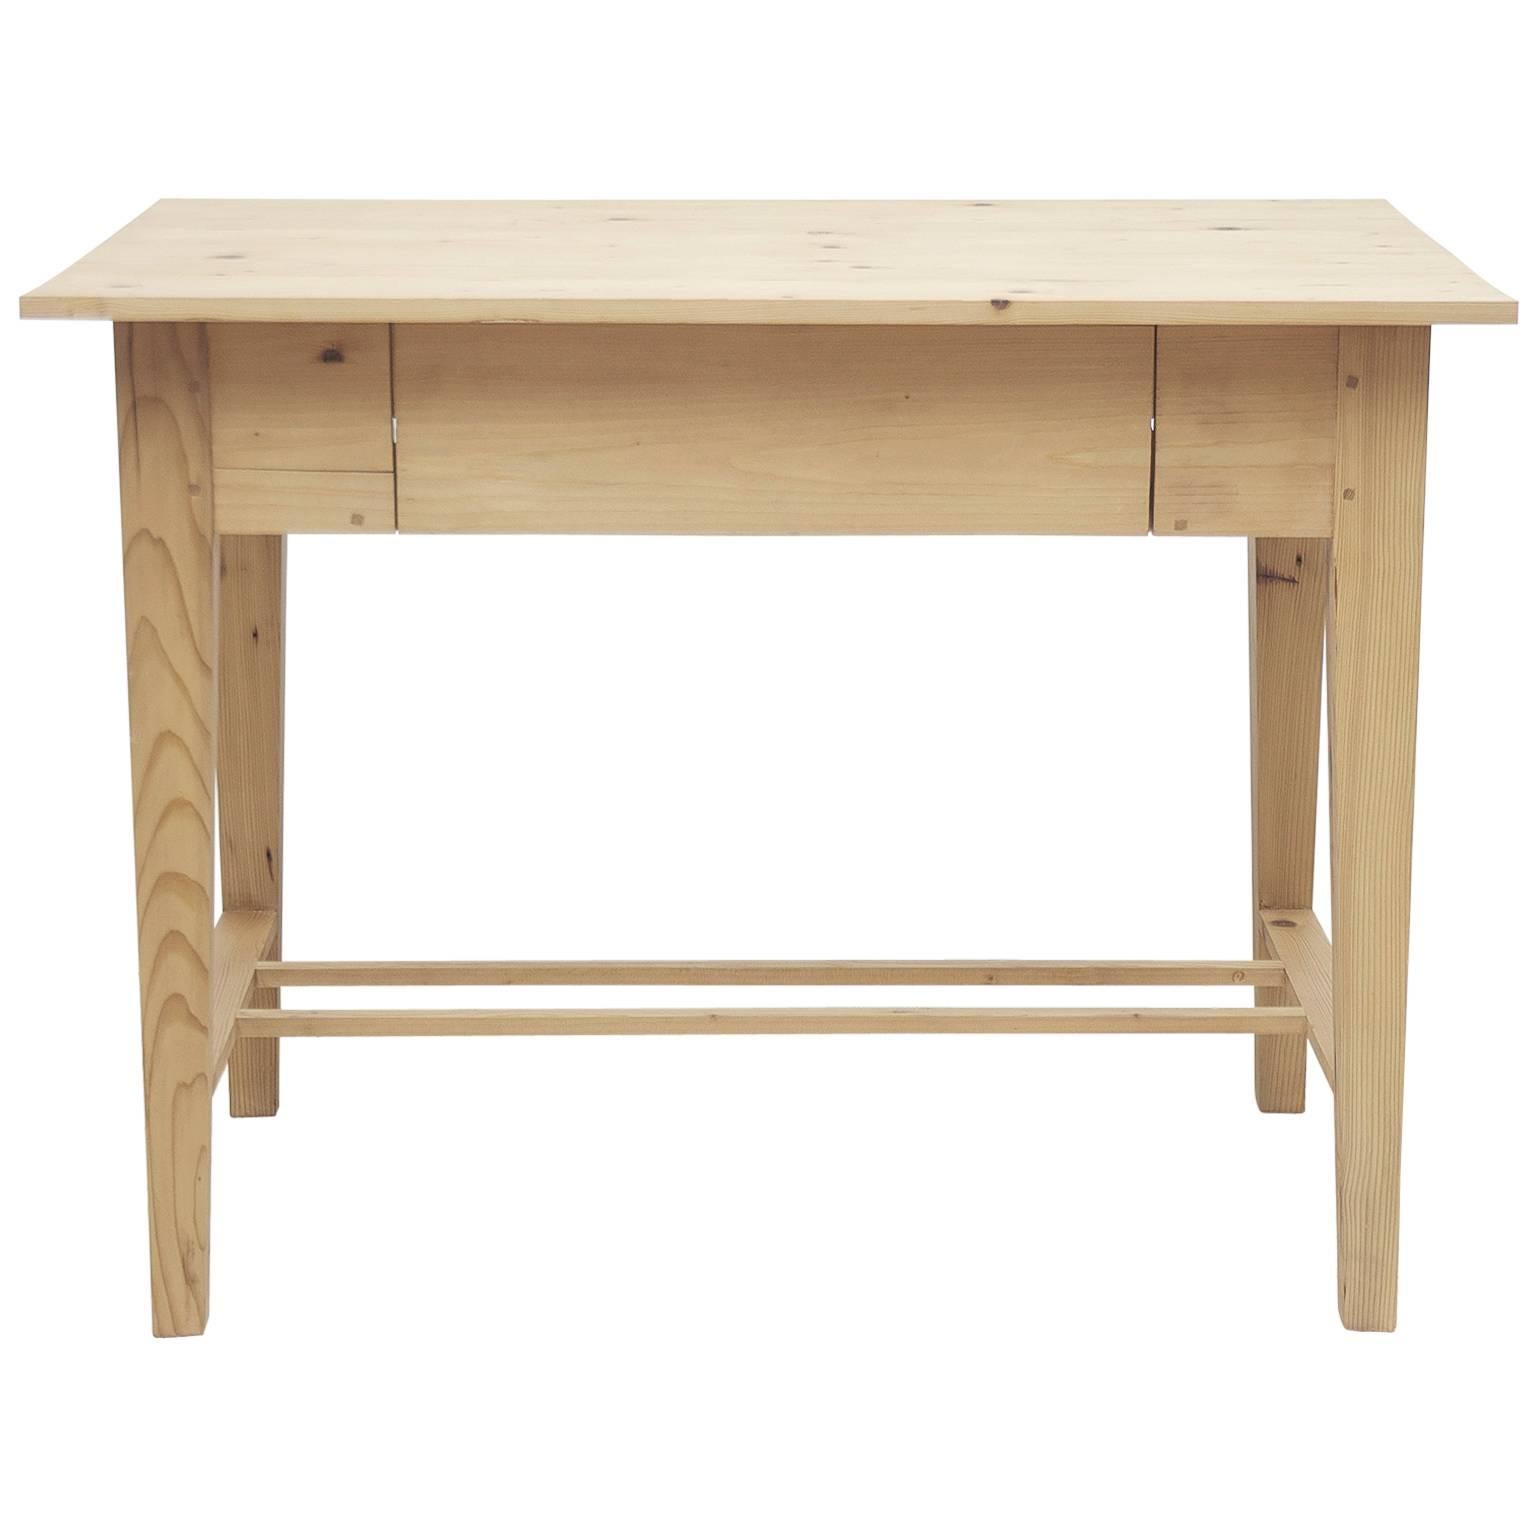 Bonnin Ashley Custom Made Pine Writing Table or Desk in the Jugendstil Style